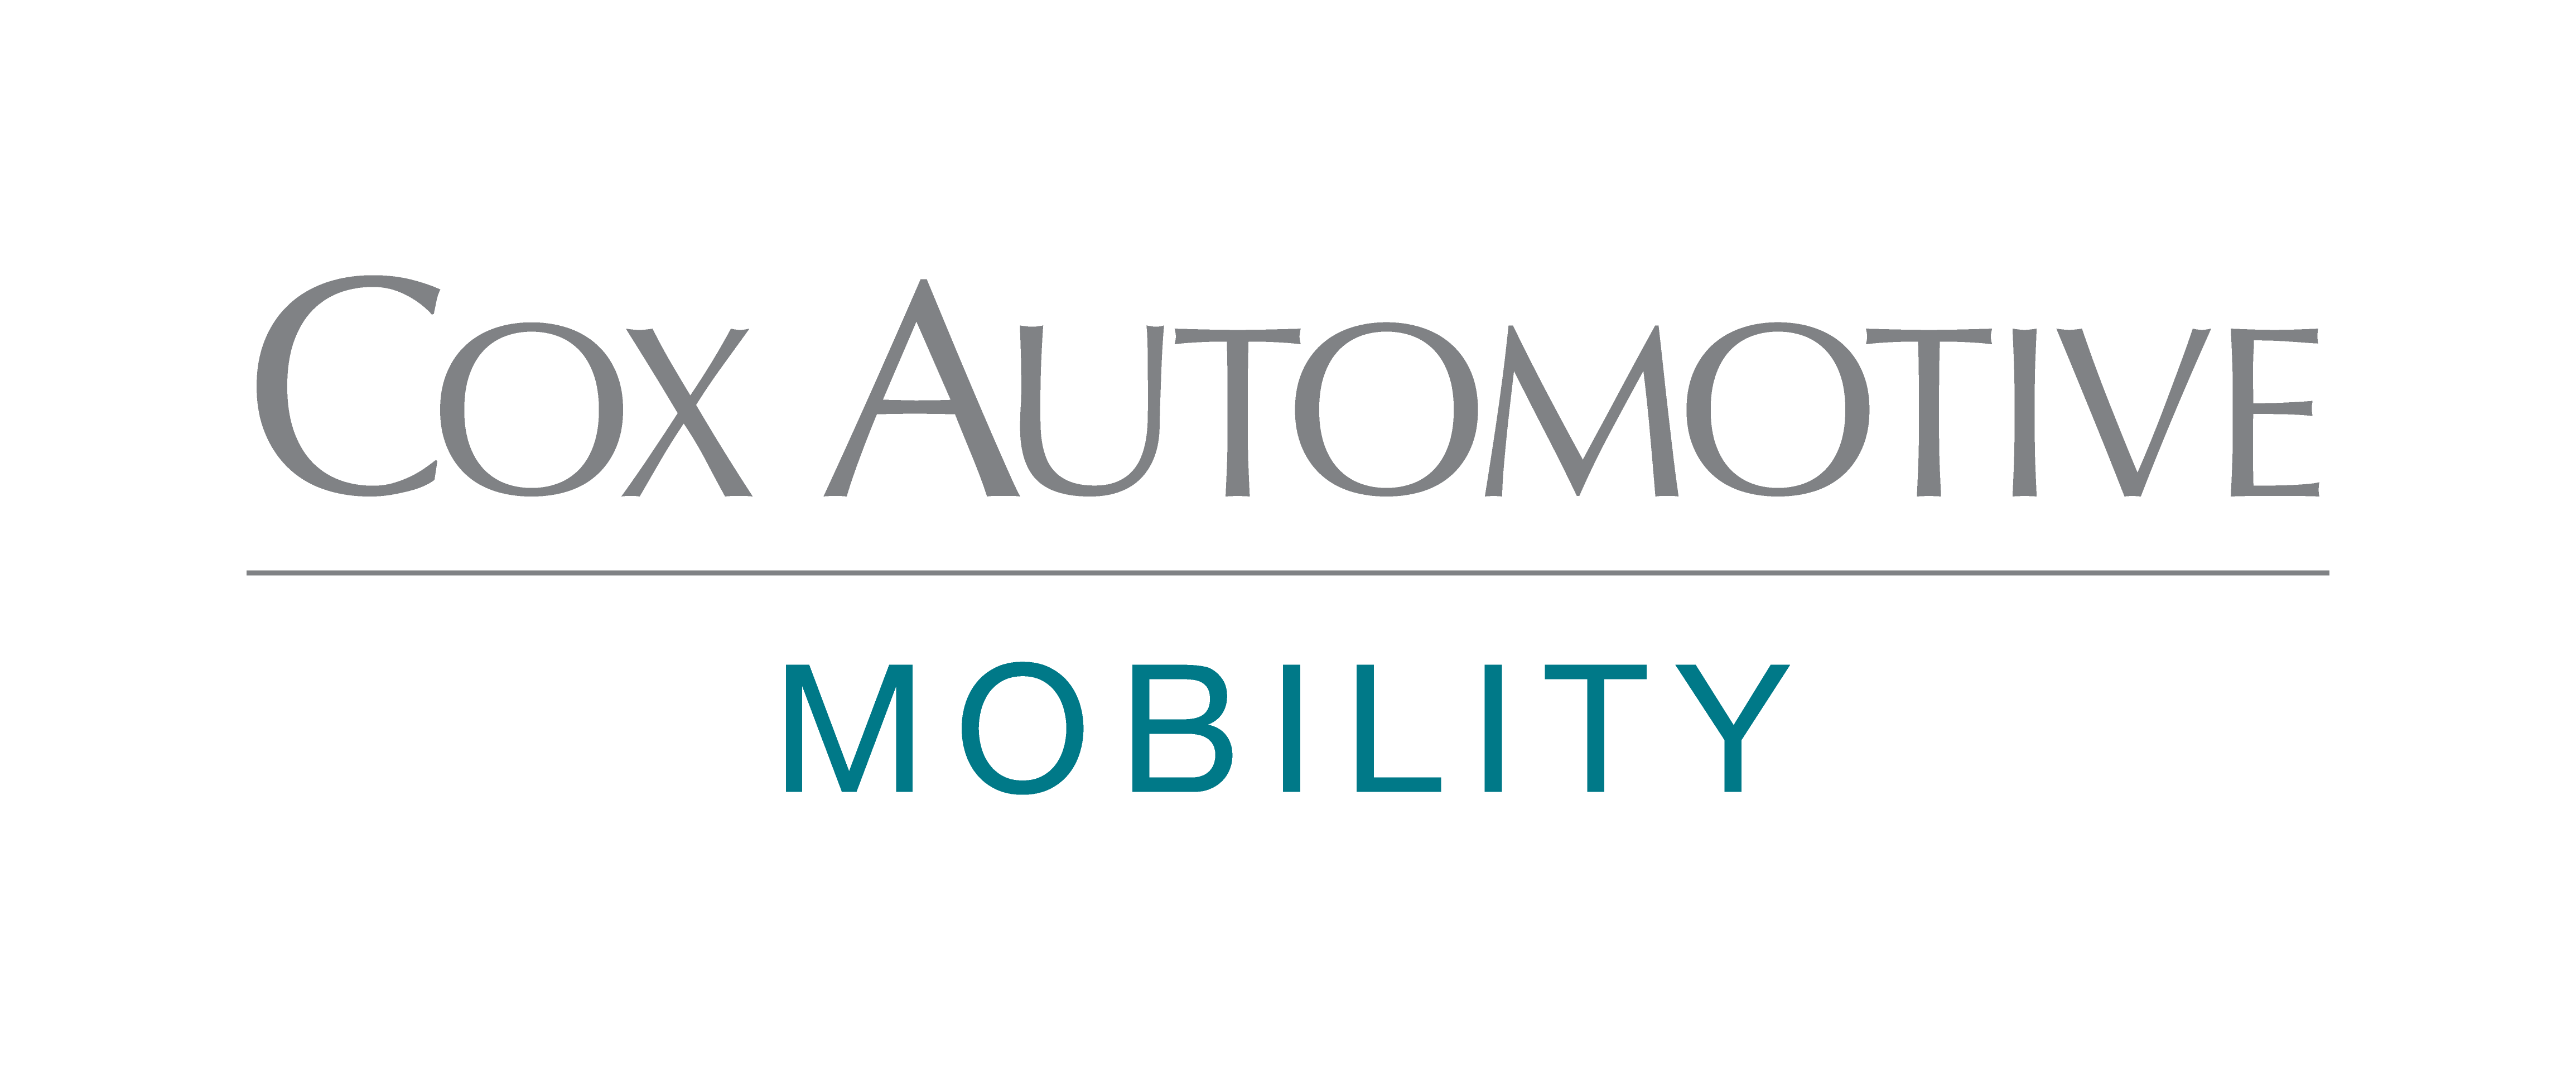 Cox Automotive Mobility logo